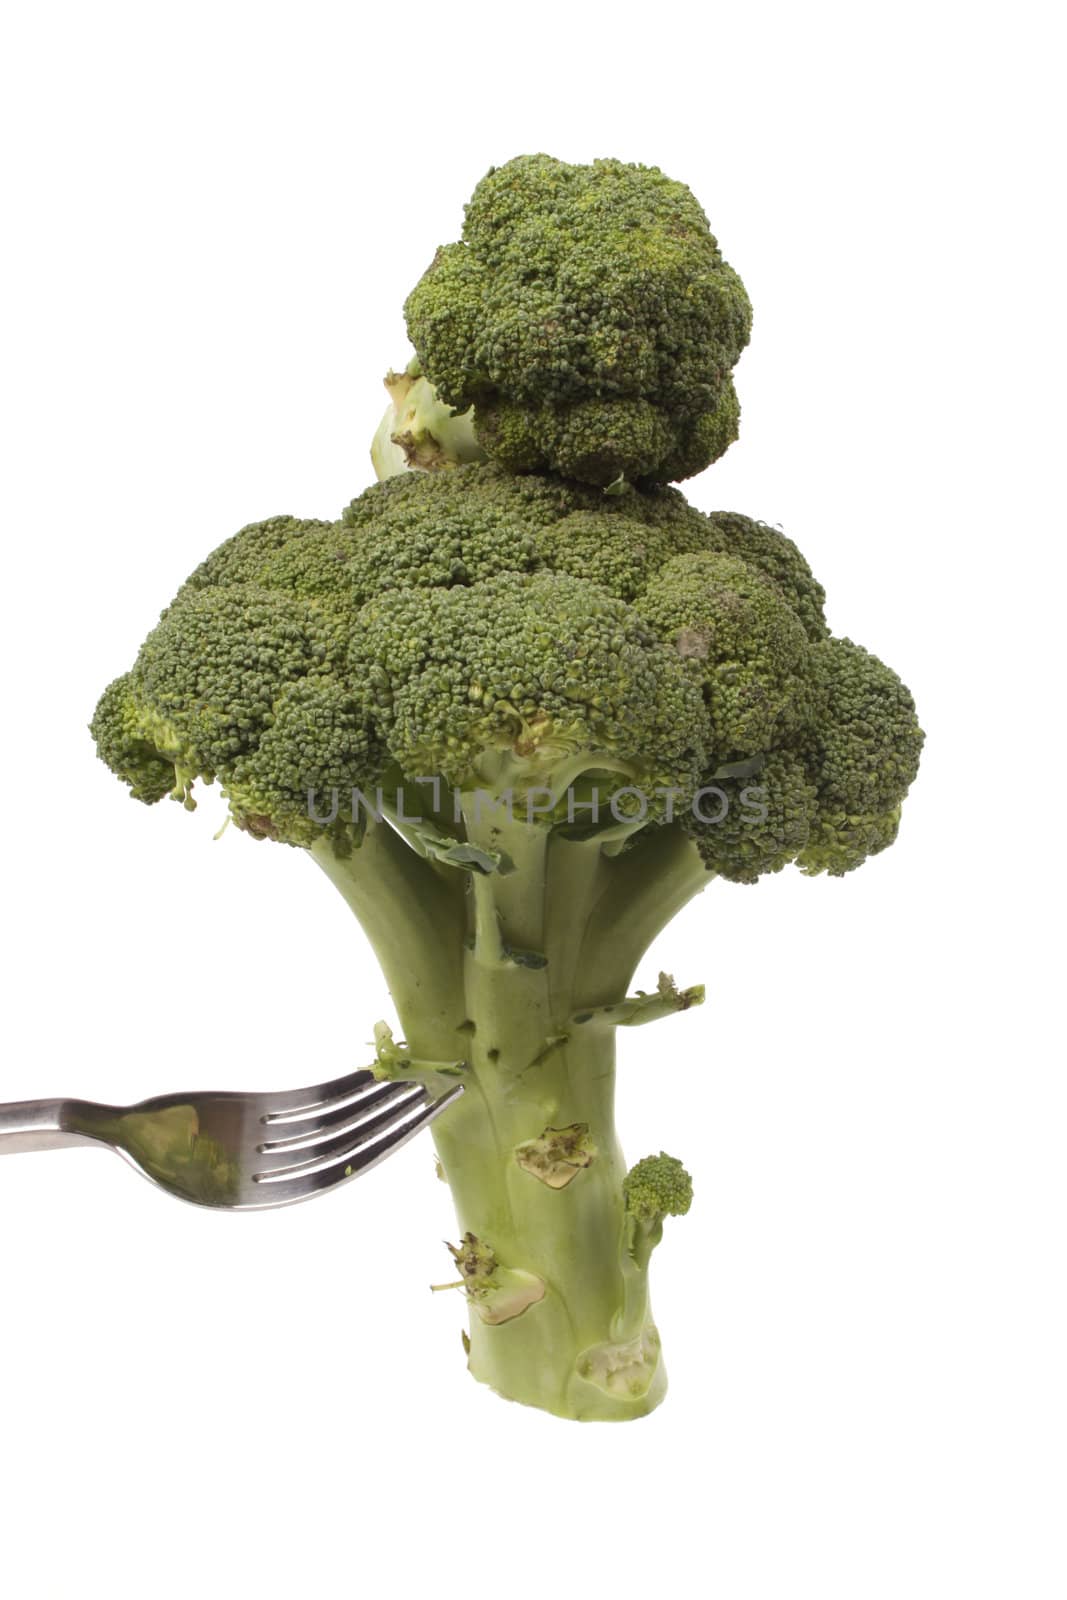 broccoli on a fork  by joophoek